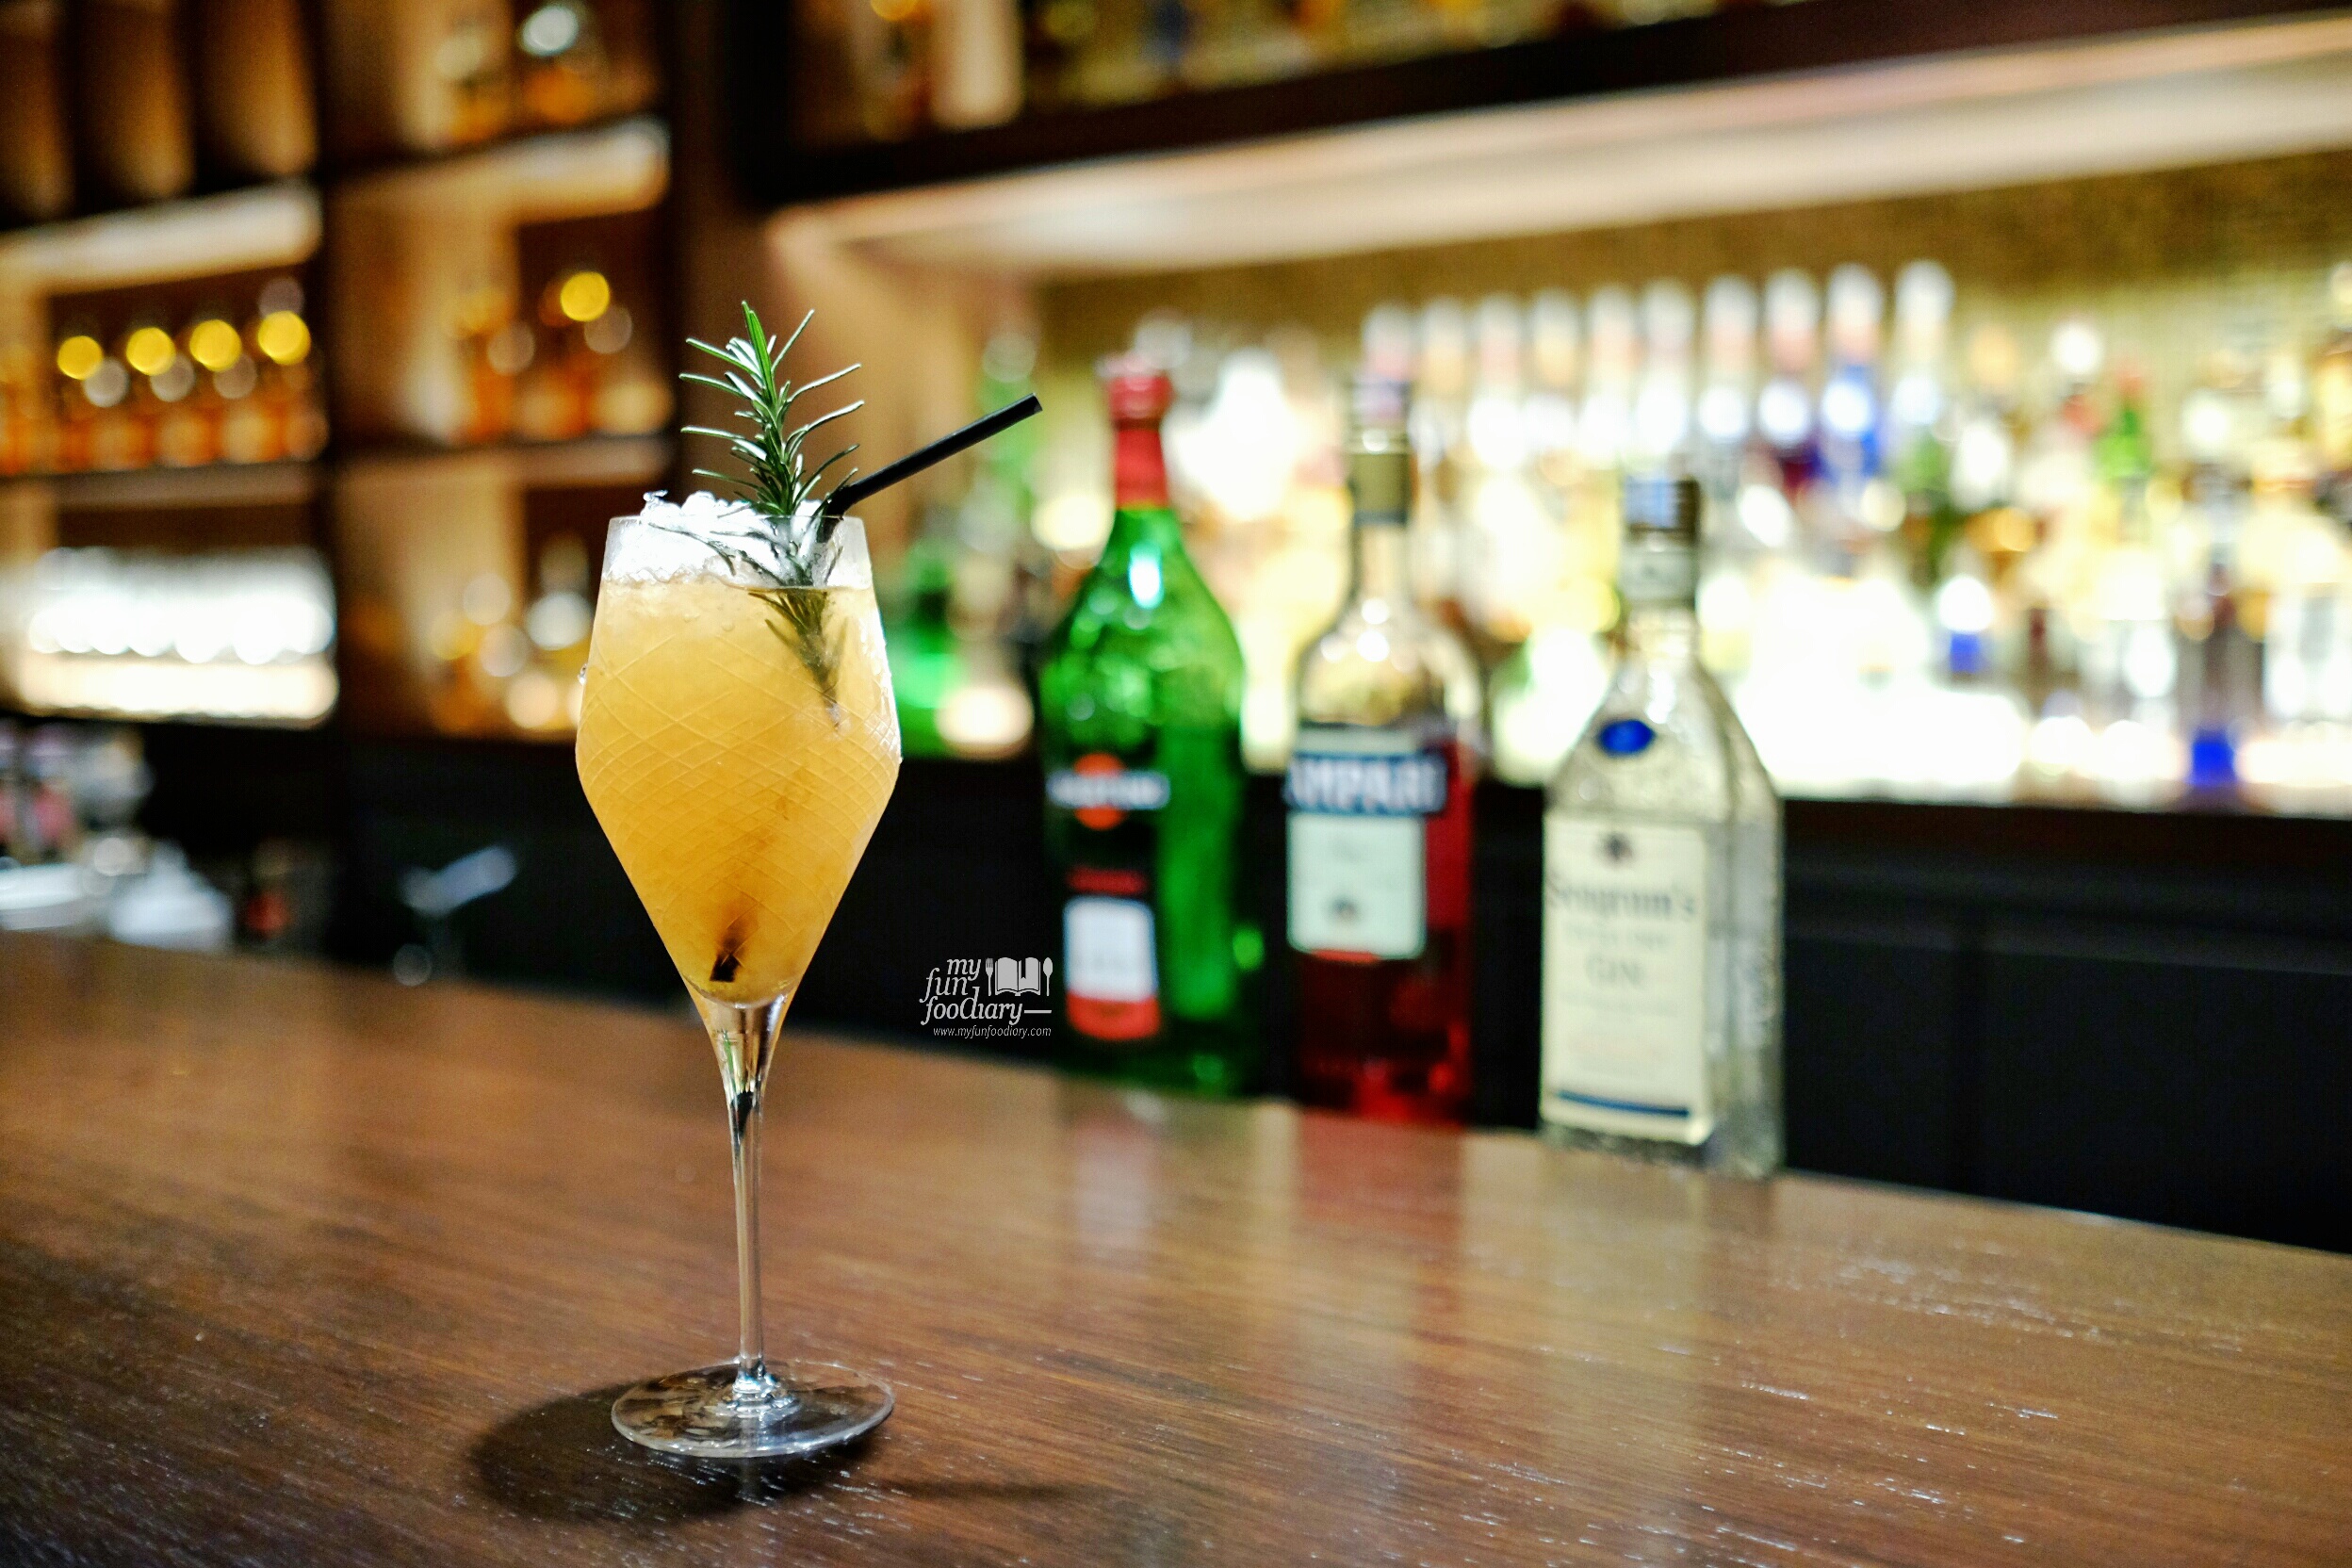 Highland Daisy Cocktail at Barong Bar Fairmont Jakarta by Myfunfoodiary